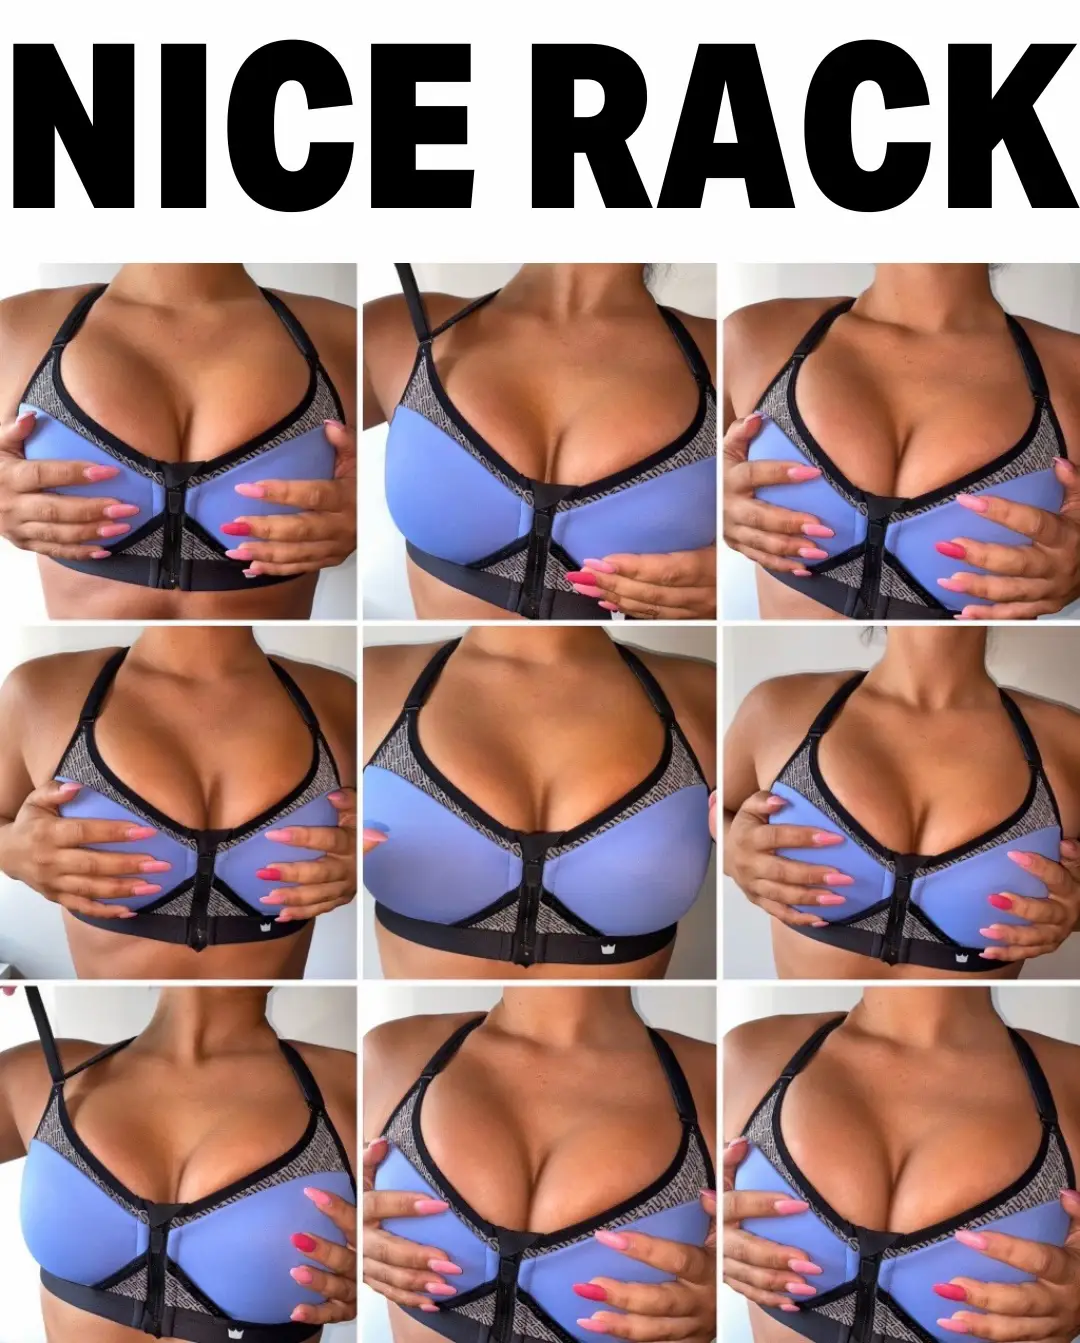 Explore the Best Nicerack Art